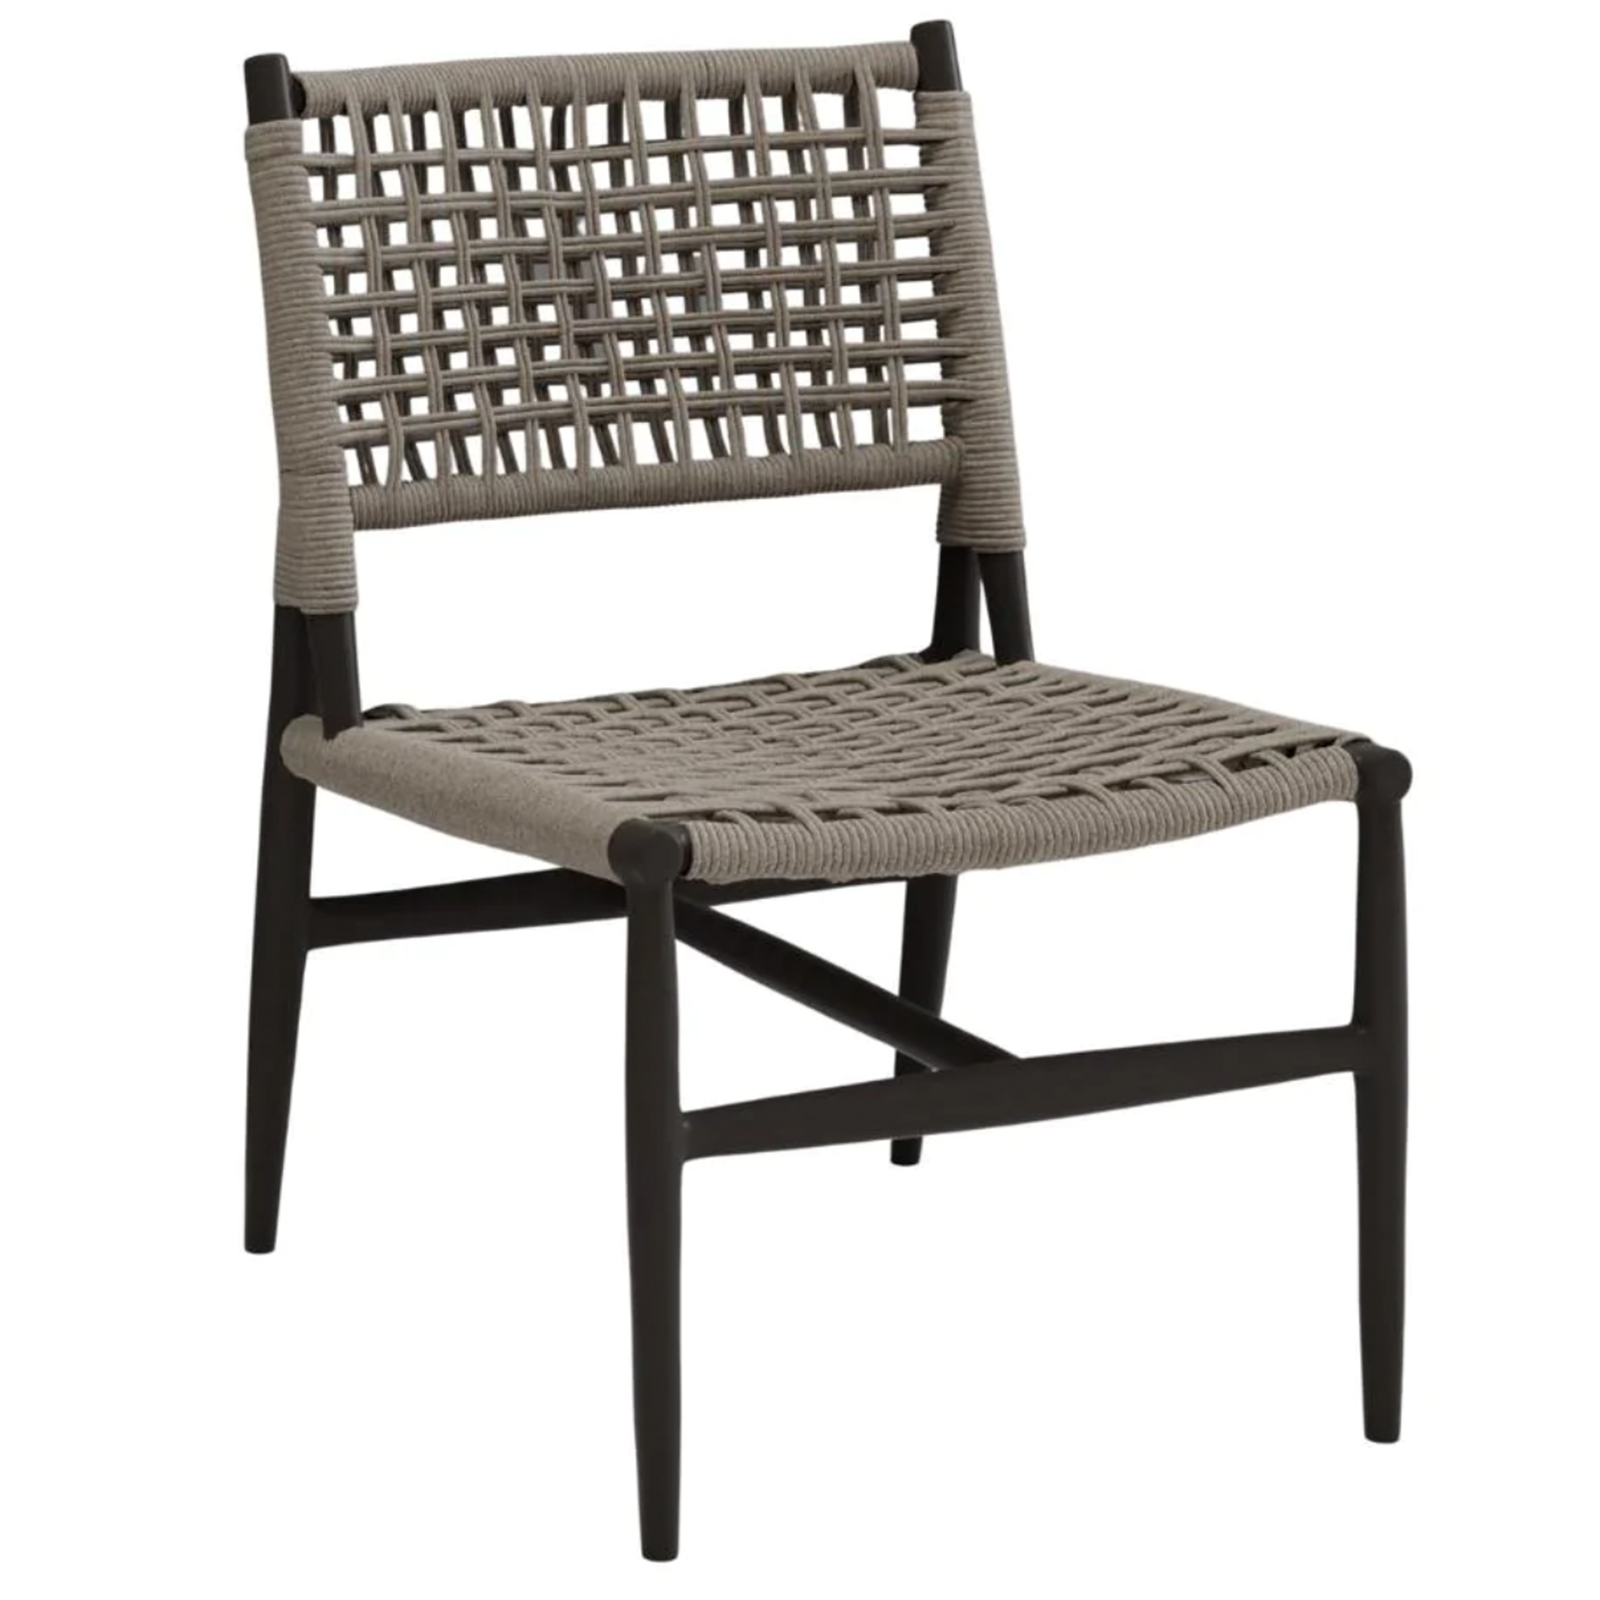 Granger Outdoor Dining Chair